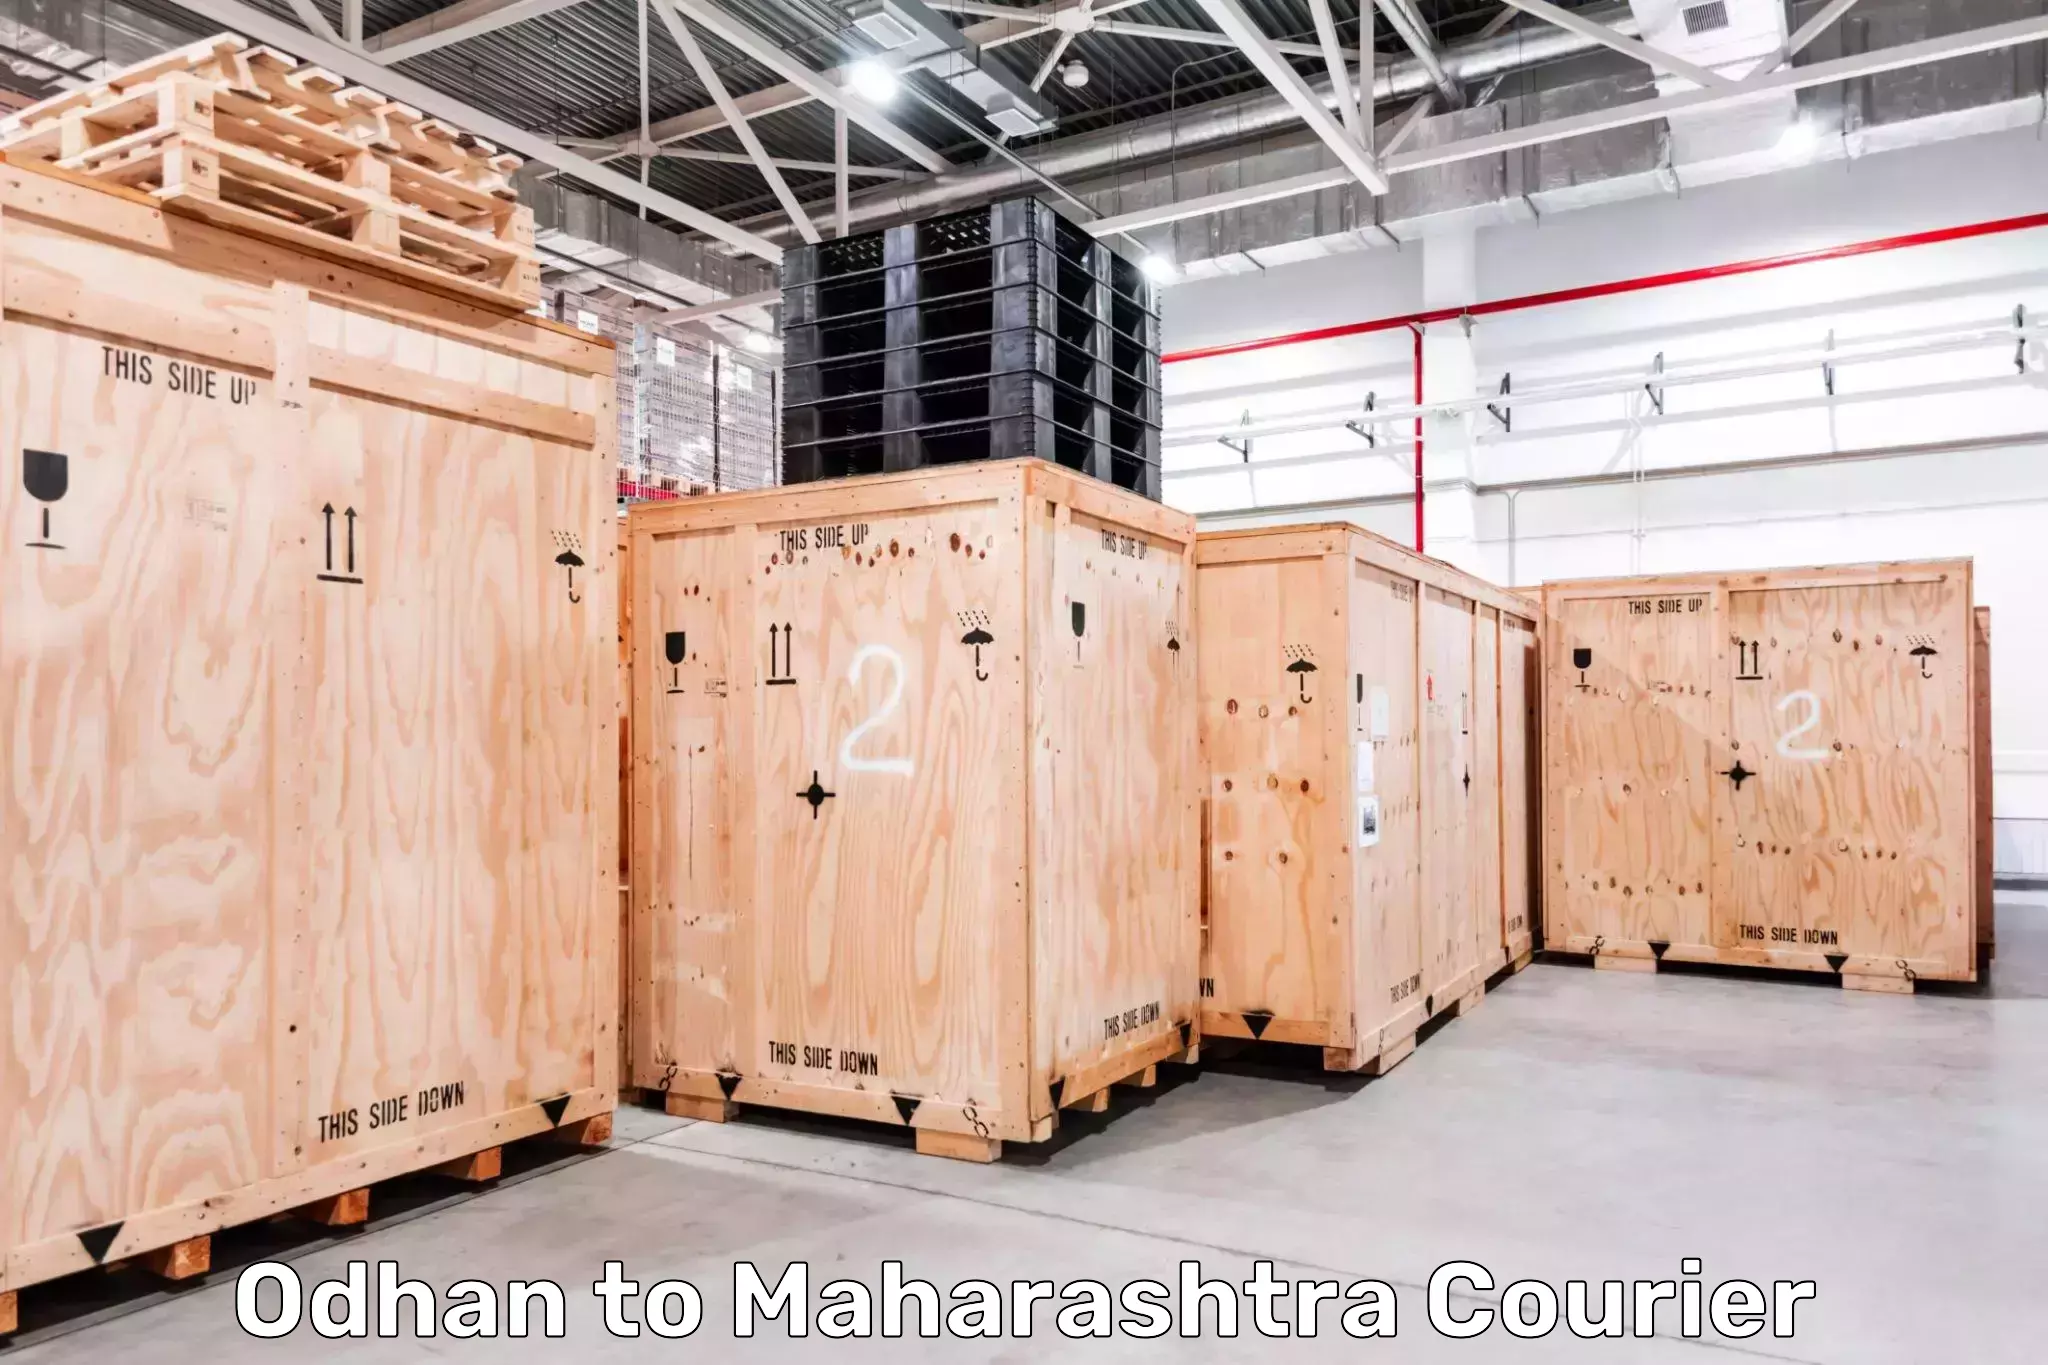 Cross-border shipping in Odhan to Maharashtra